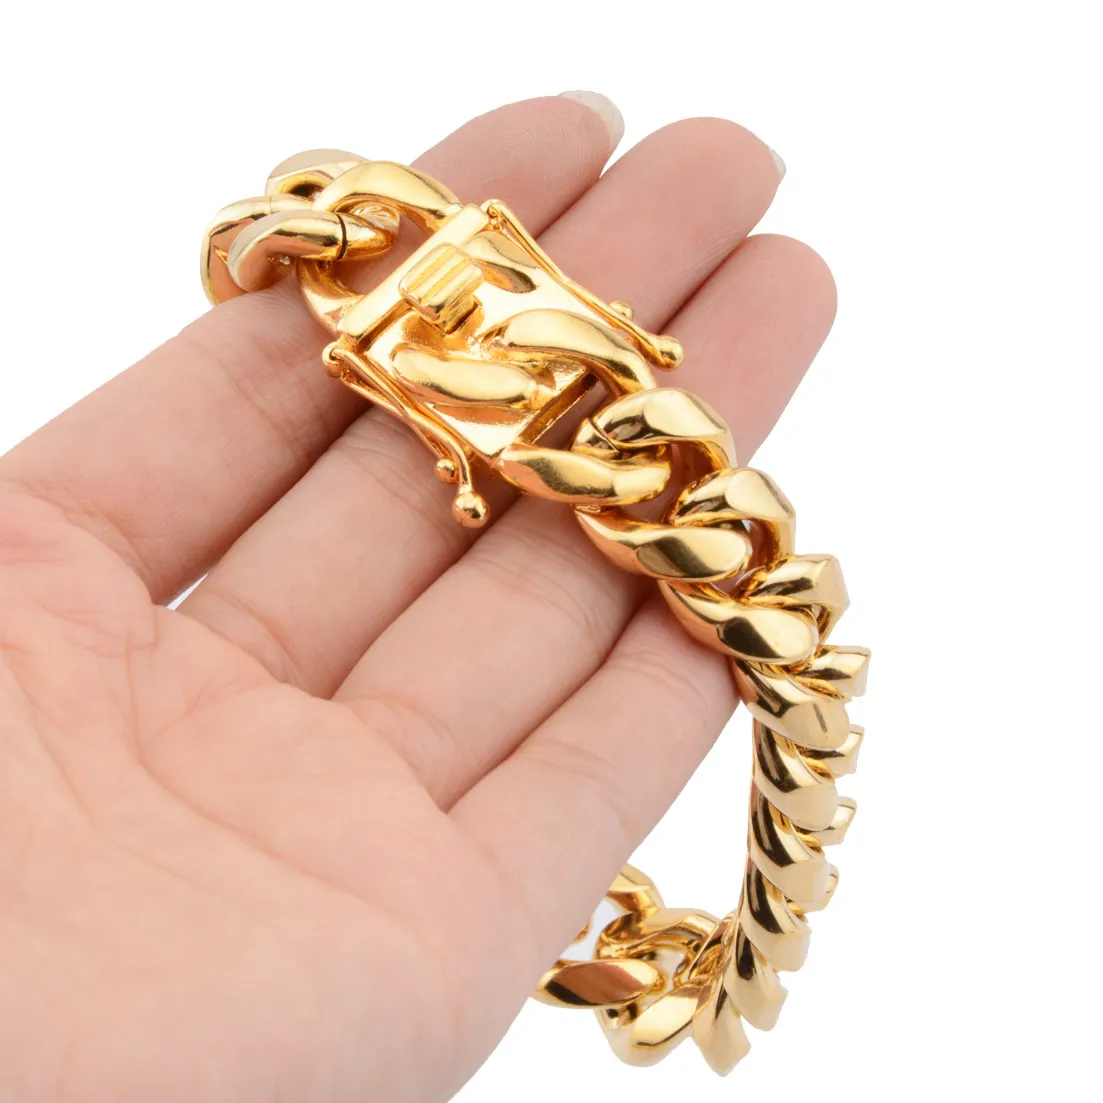 Stainless Steel Cuban Link Chain Bracelet Mens Gold Chains Bracelets Hip Hop Jewelry 8 10 12 16 18mm278P